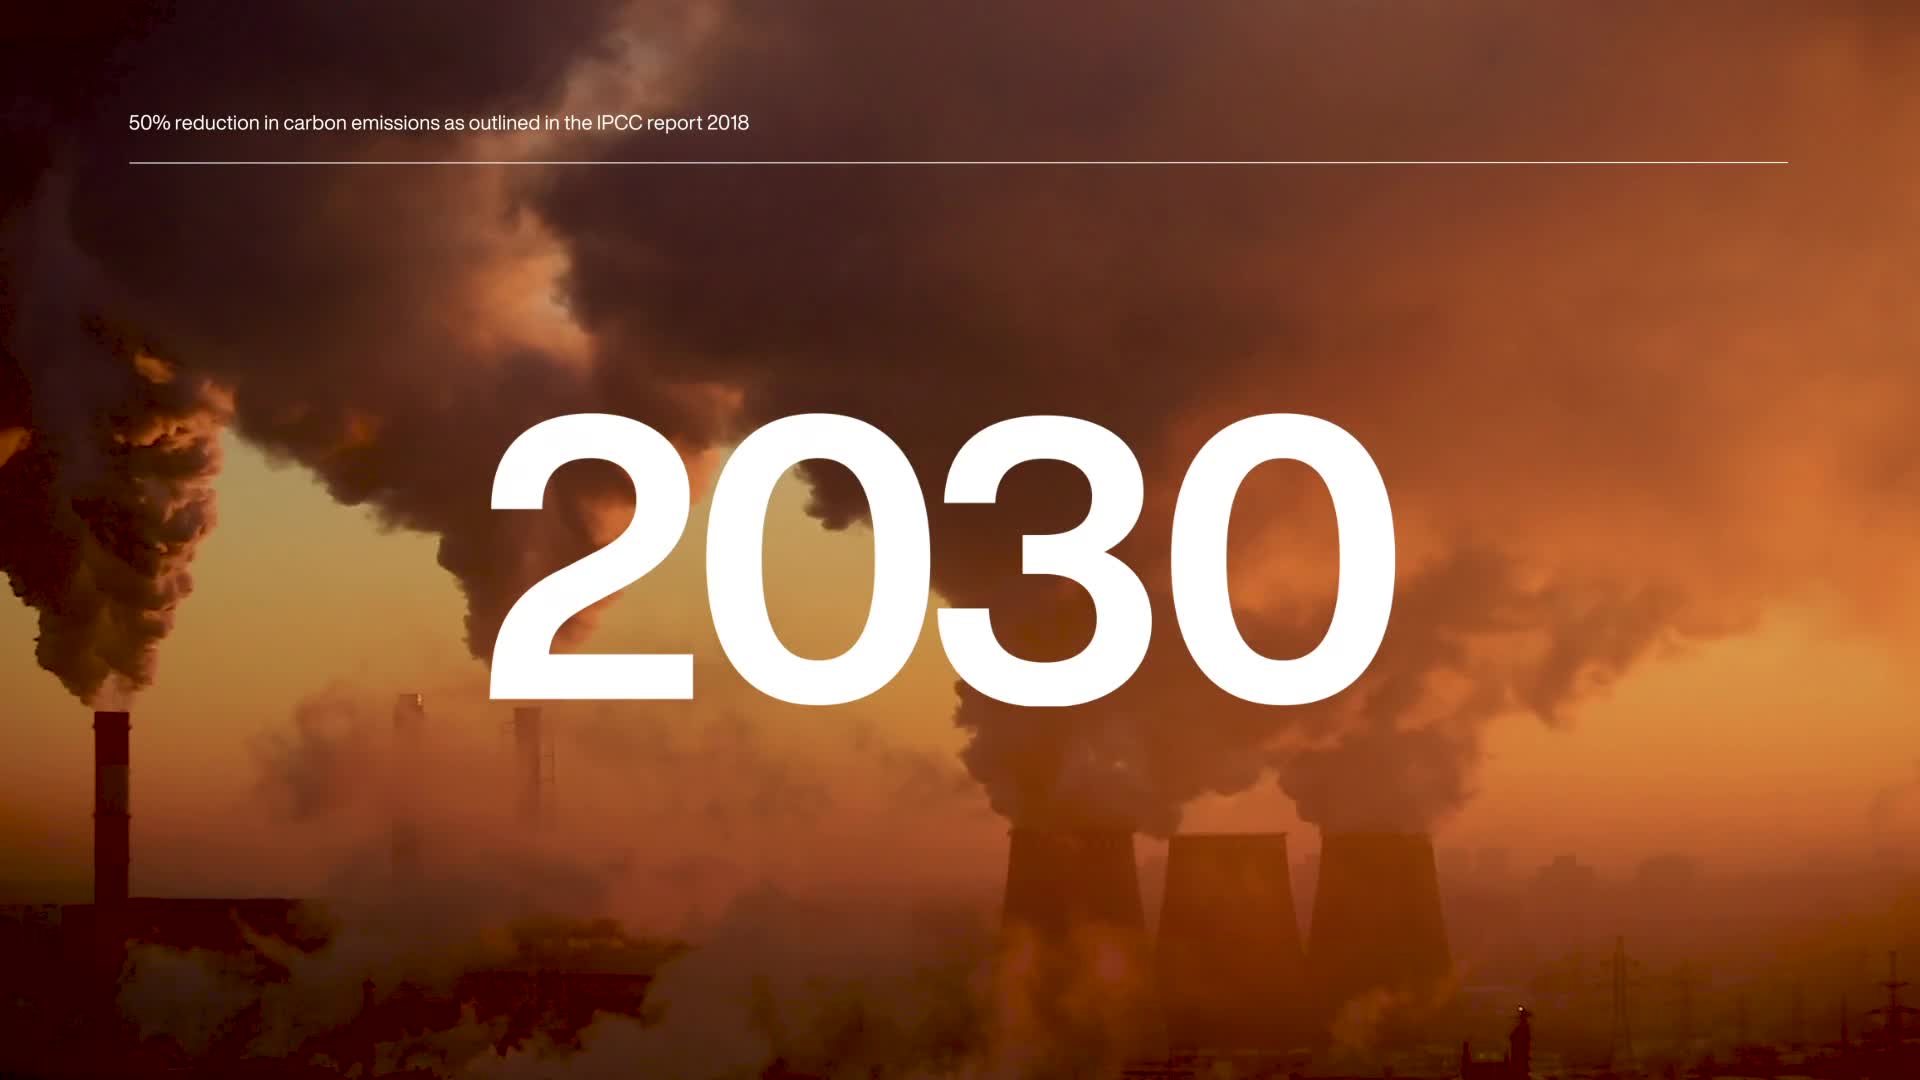 The 2030 Calculator